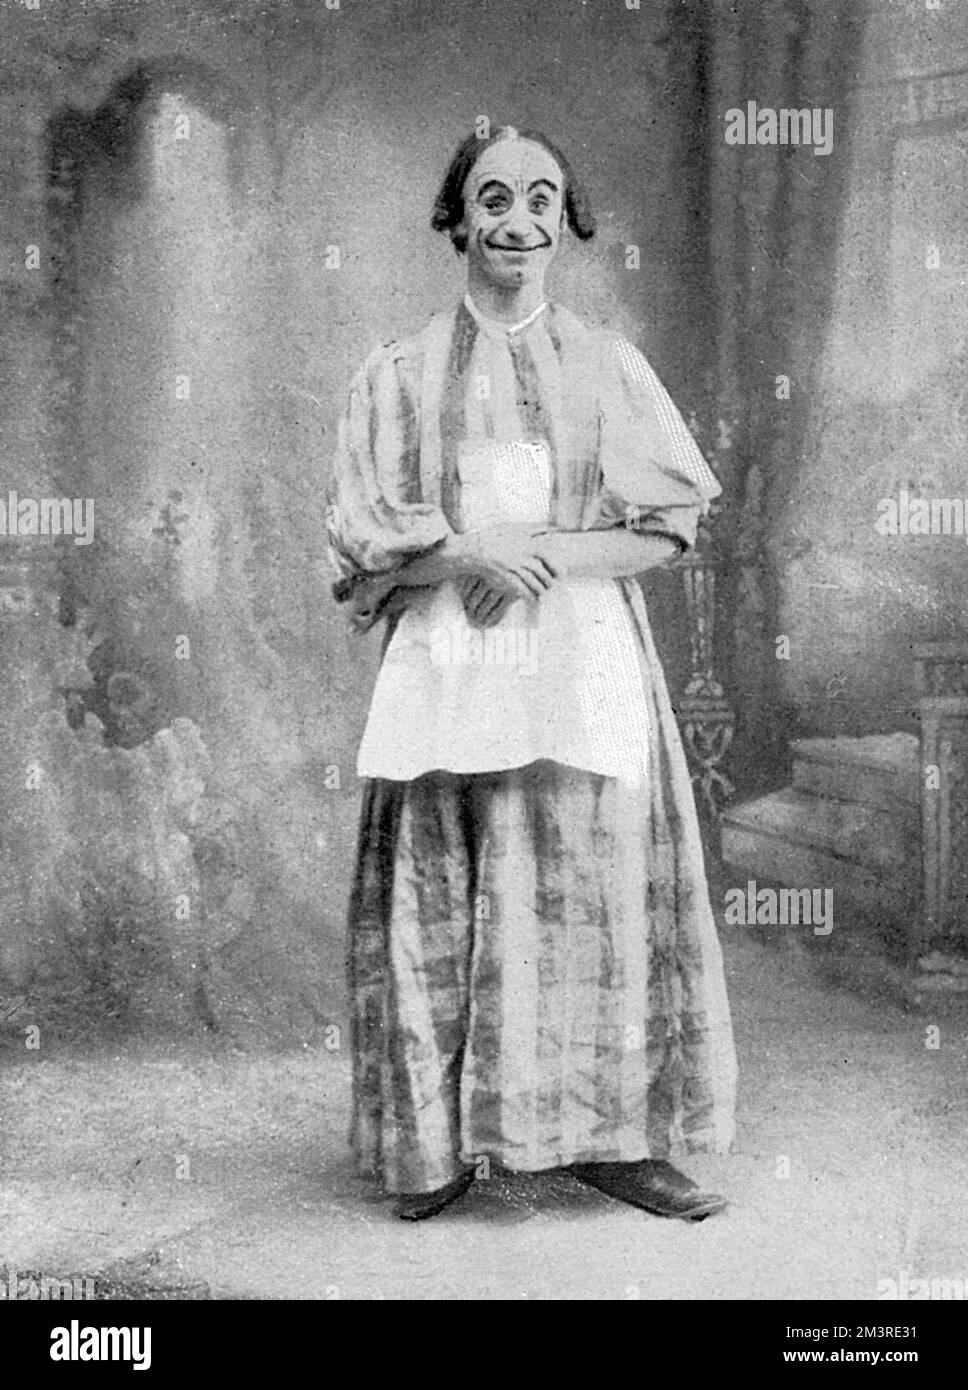 DaN Leno comme Mme Kelly. Date: 1903 Banque D'Images